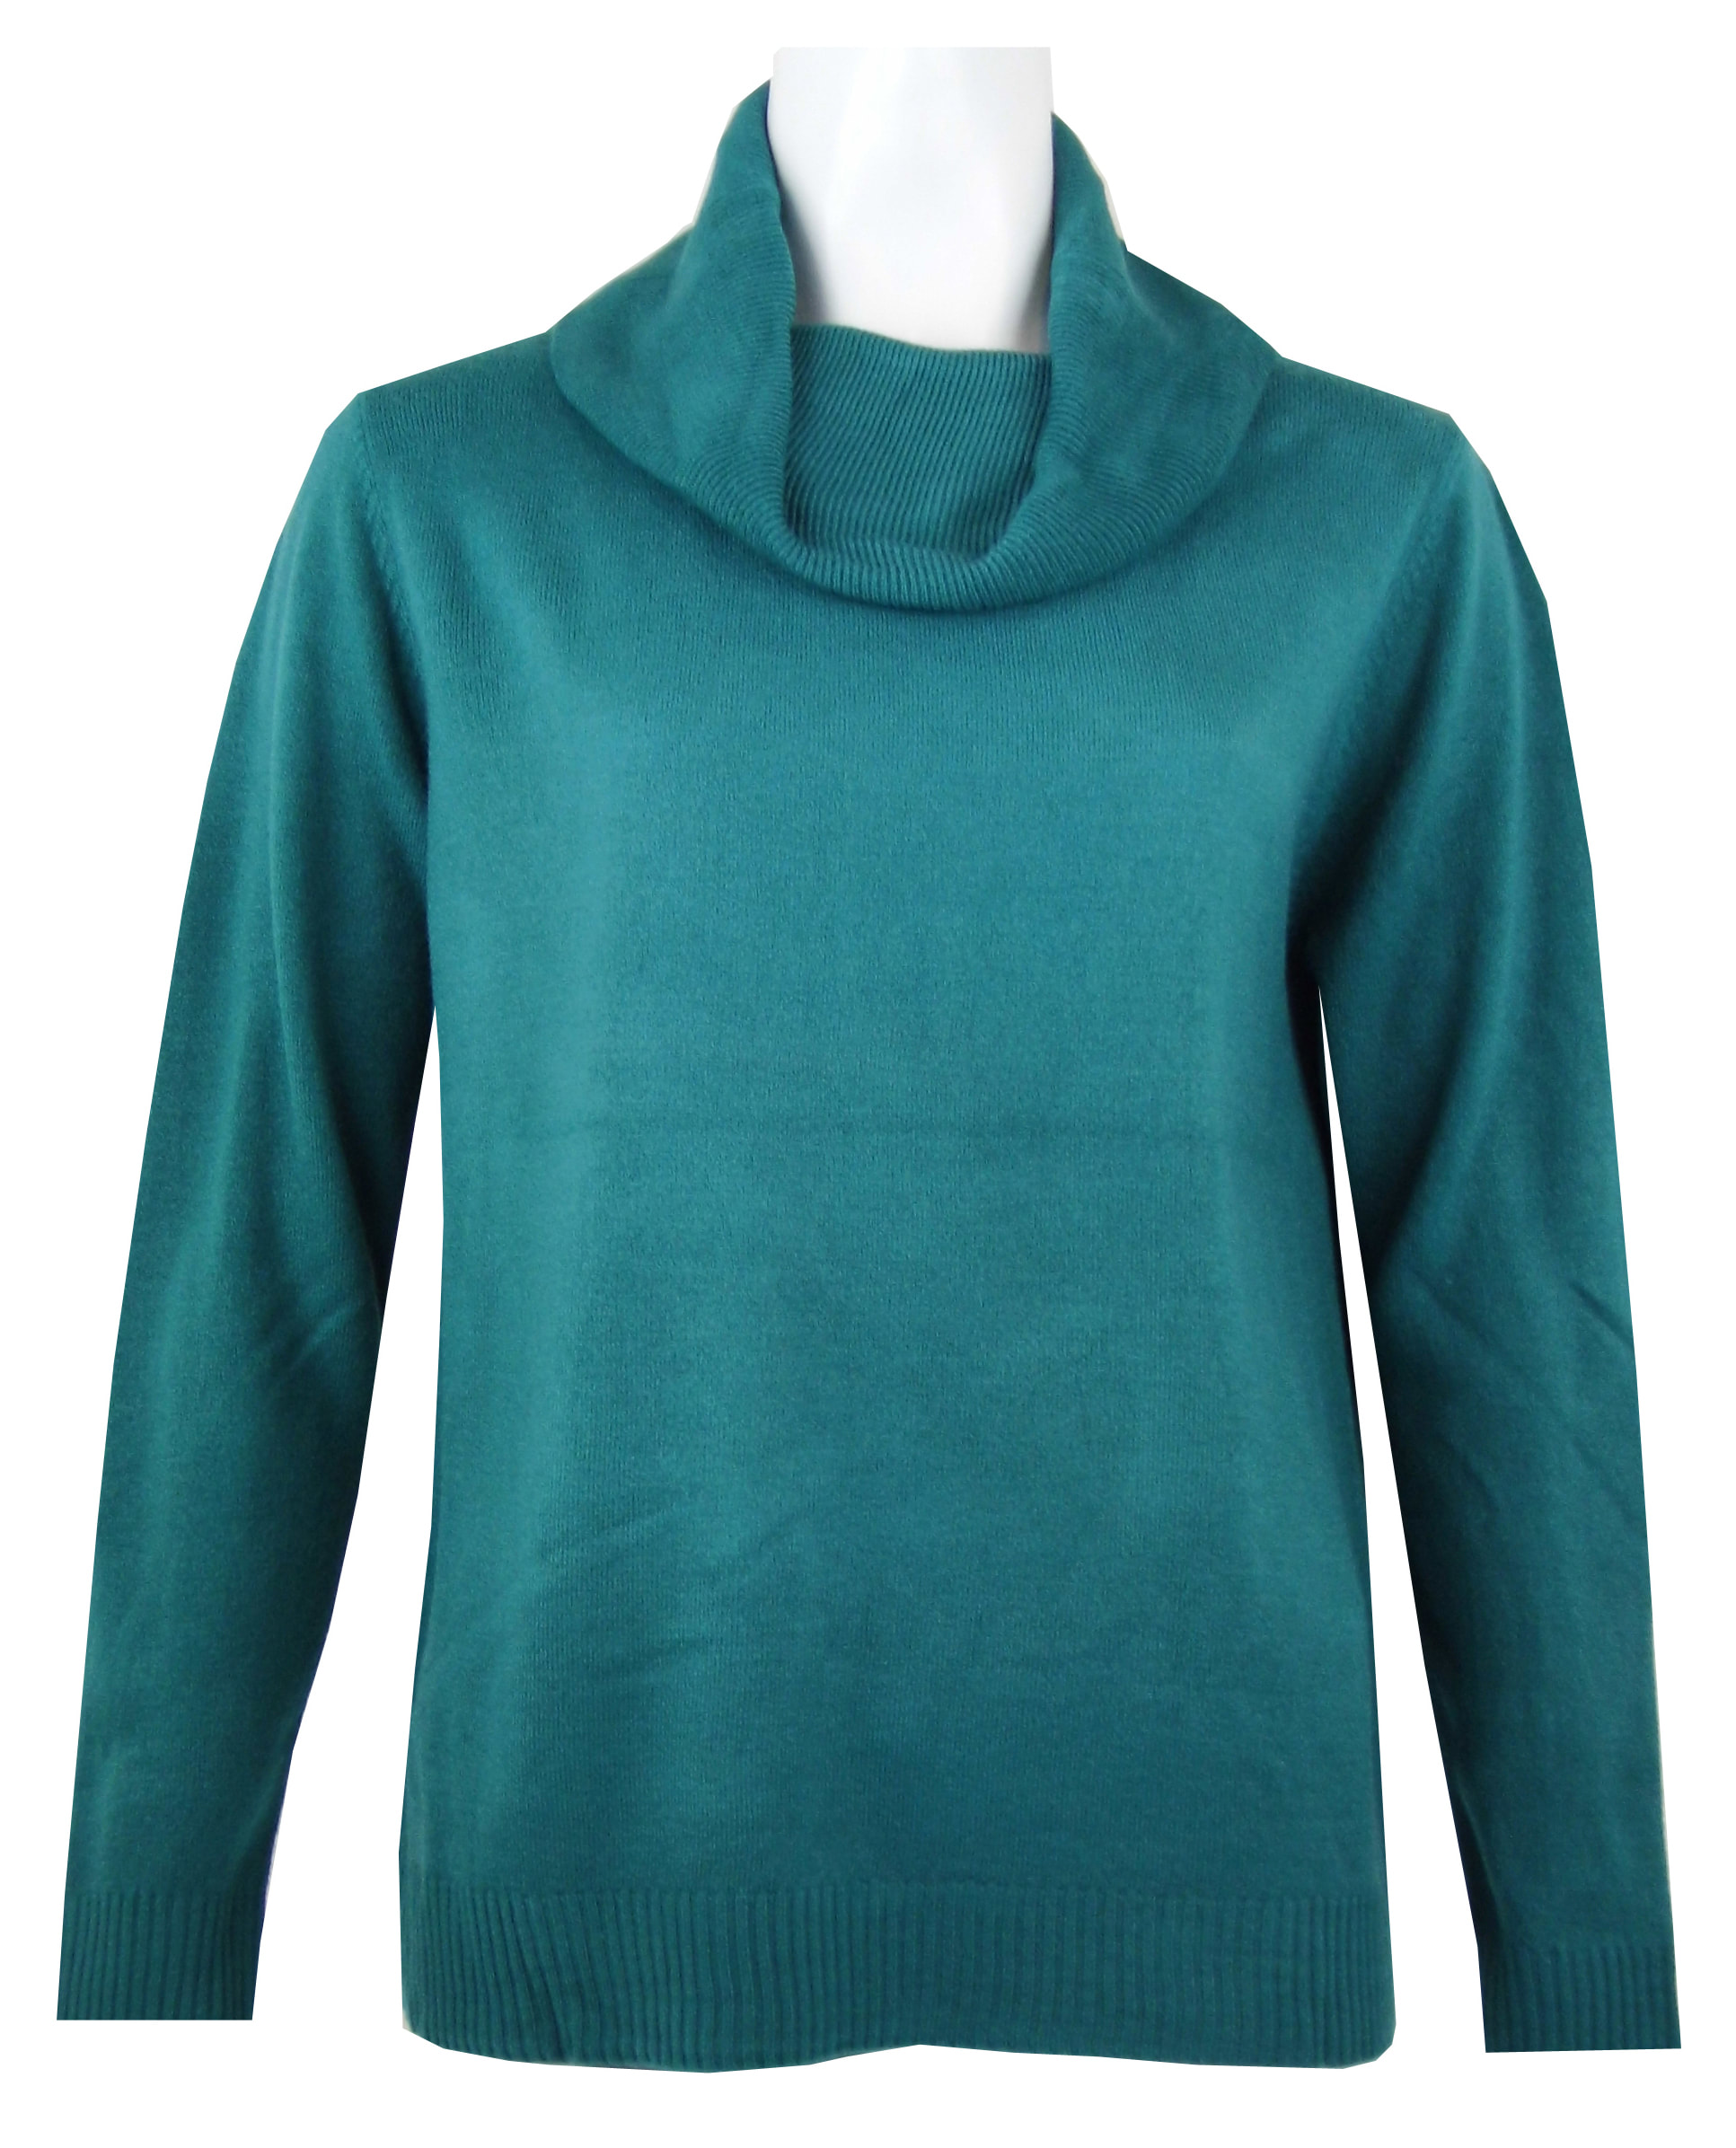 Women's Equinox acrylic cowl neck sweater